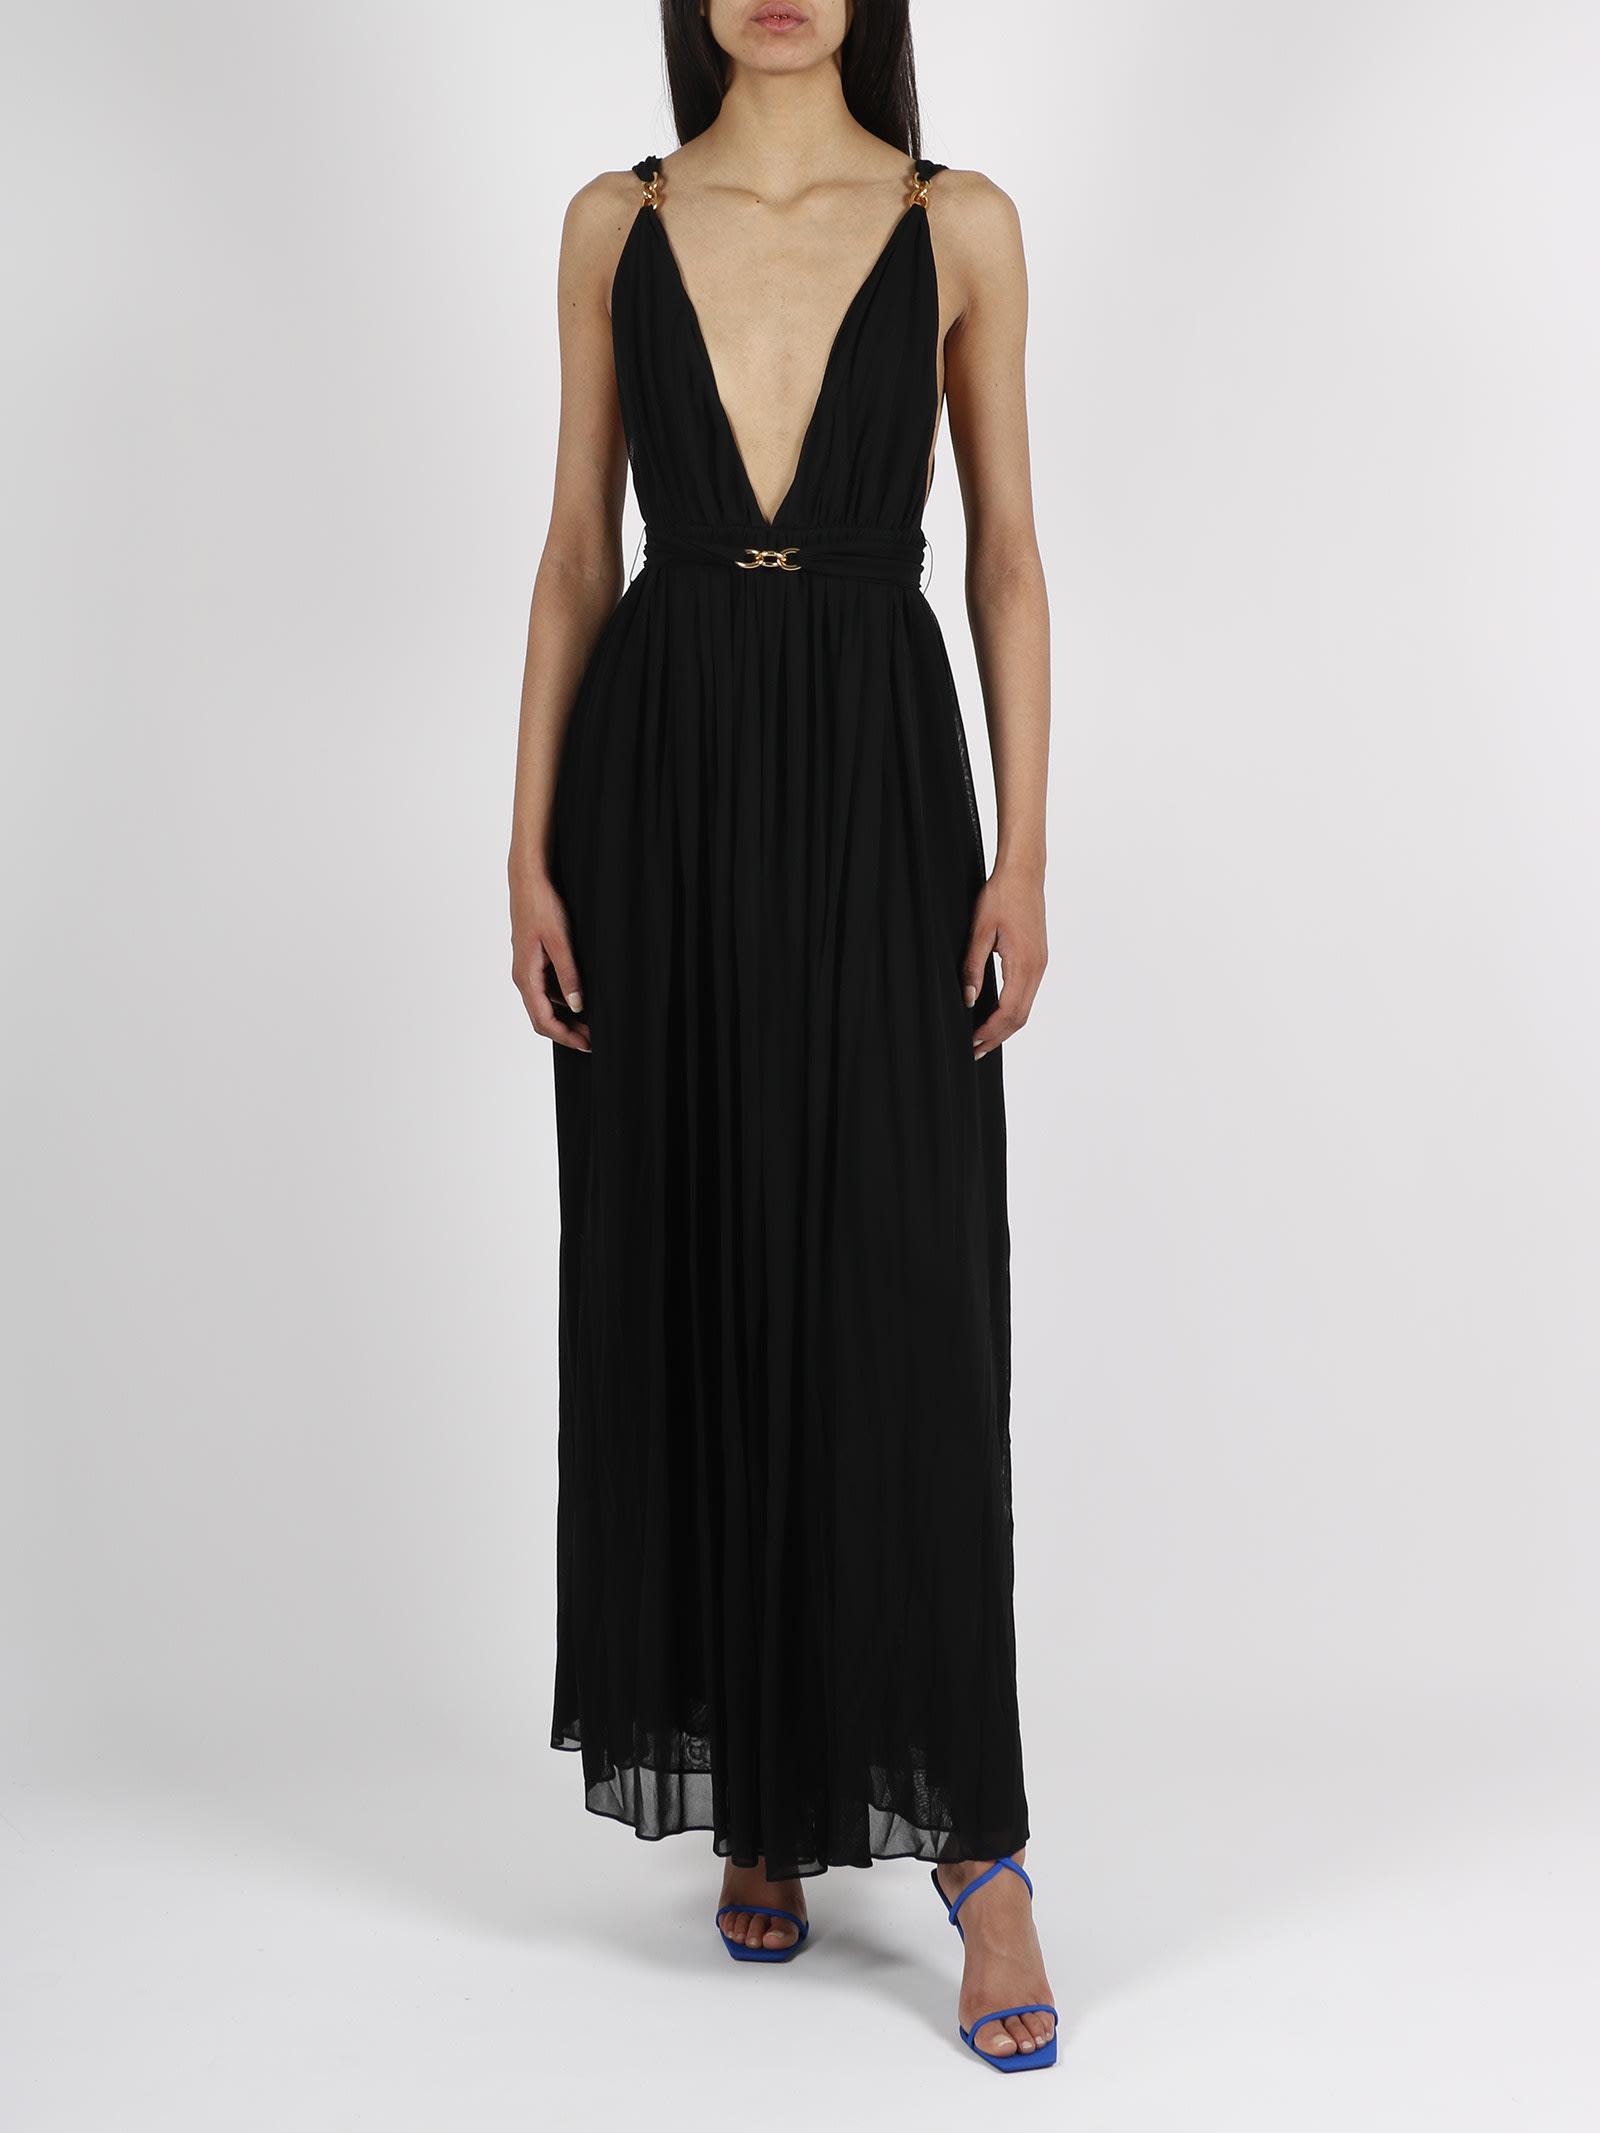 Saint Laurent Long Dress With Chain Details in Black